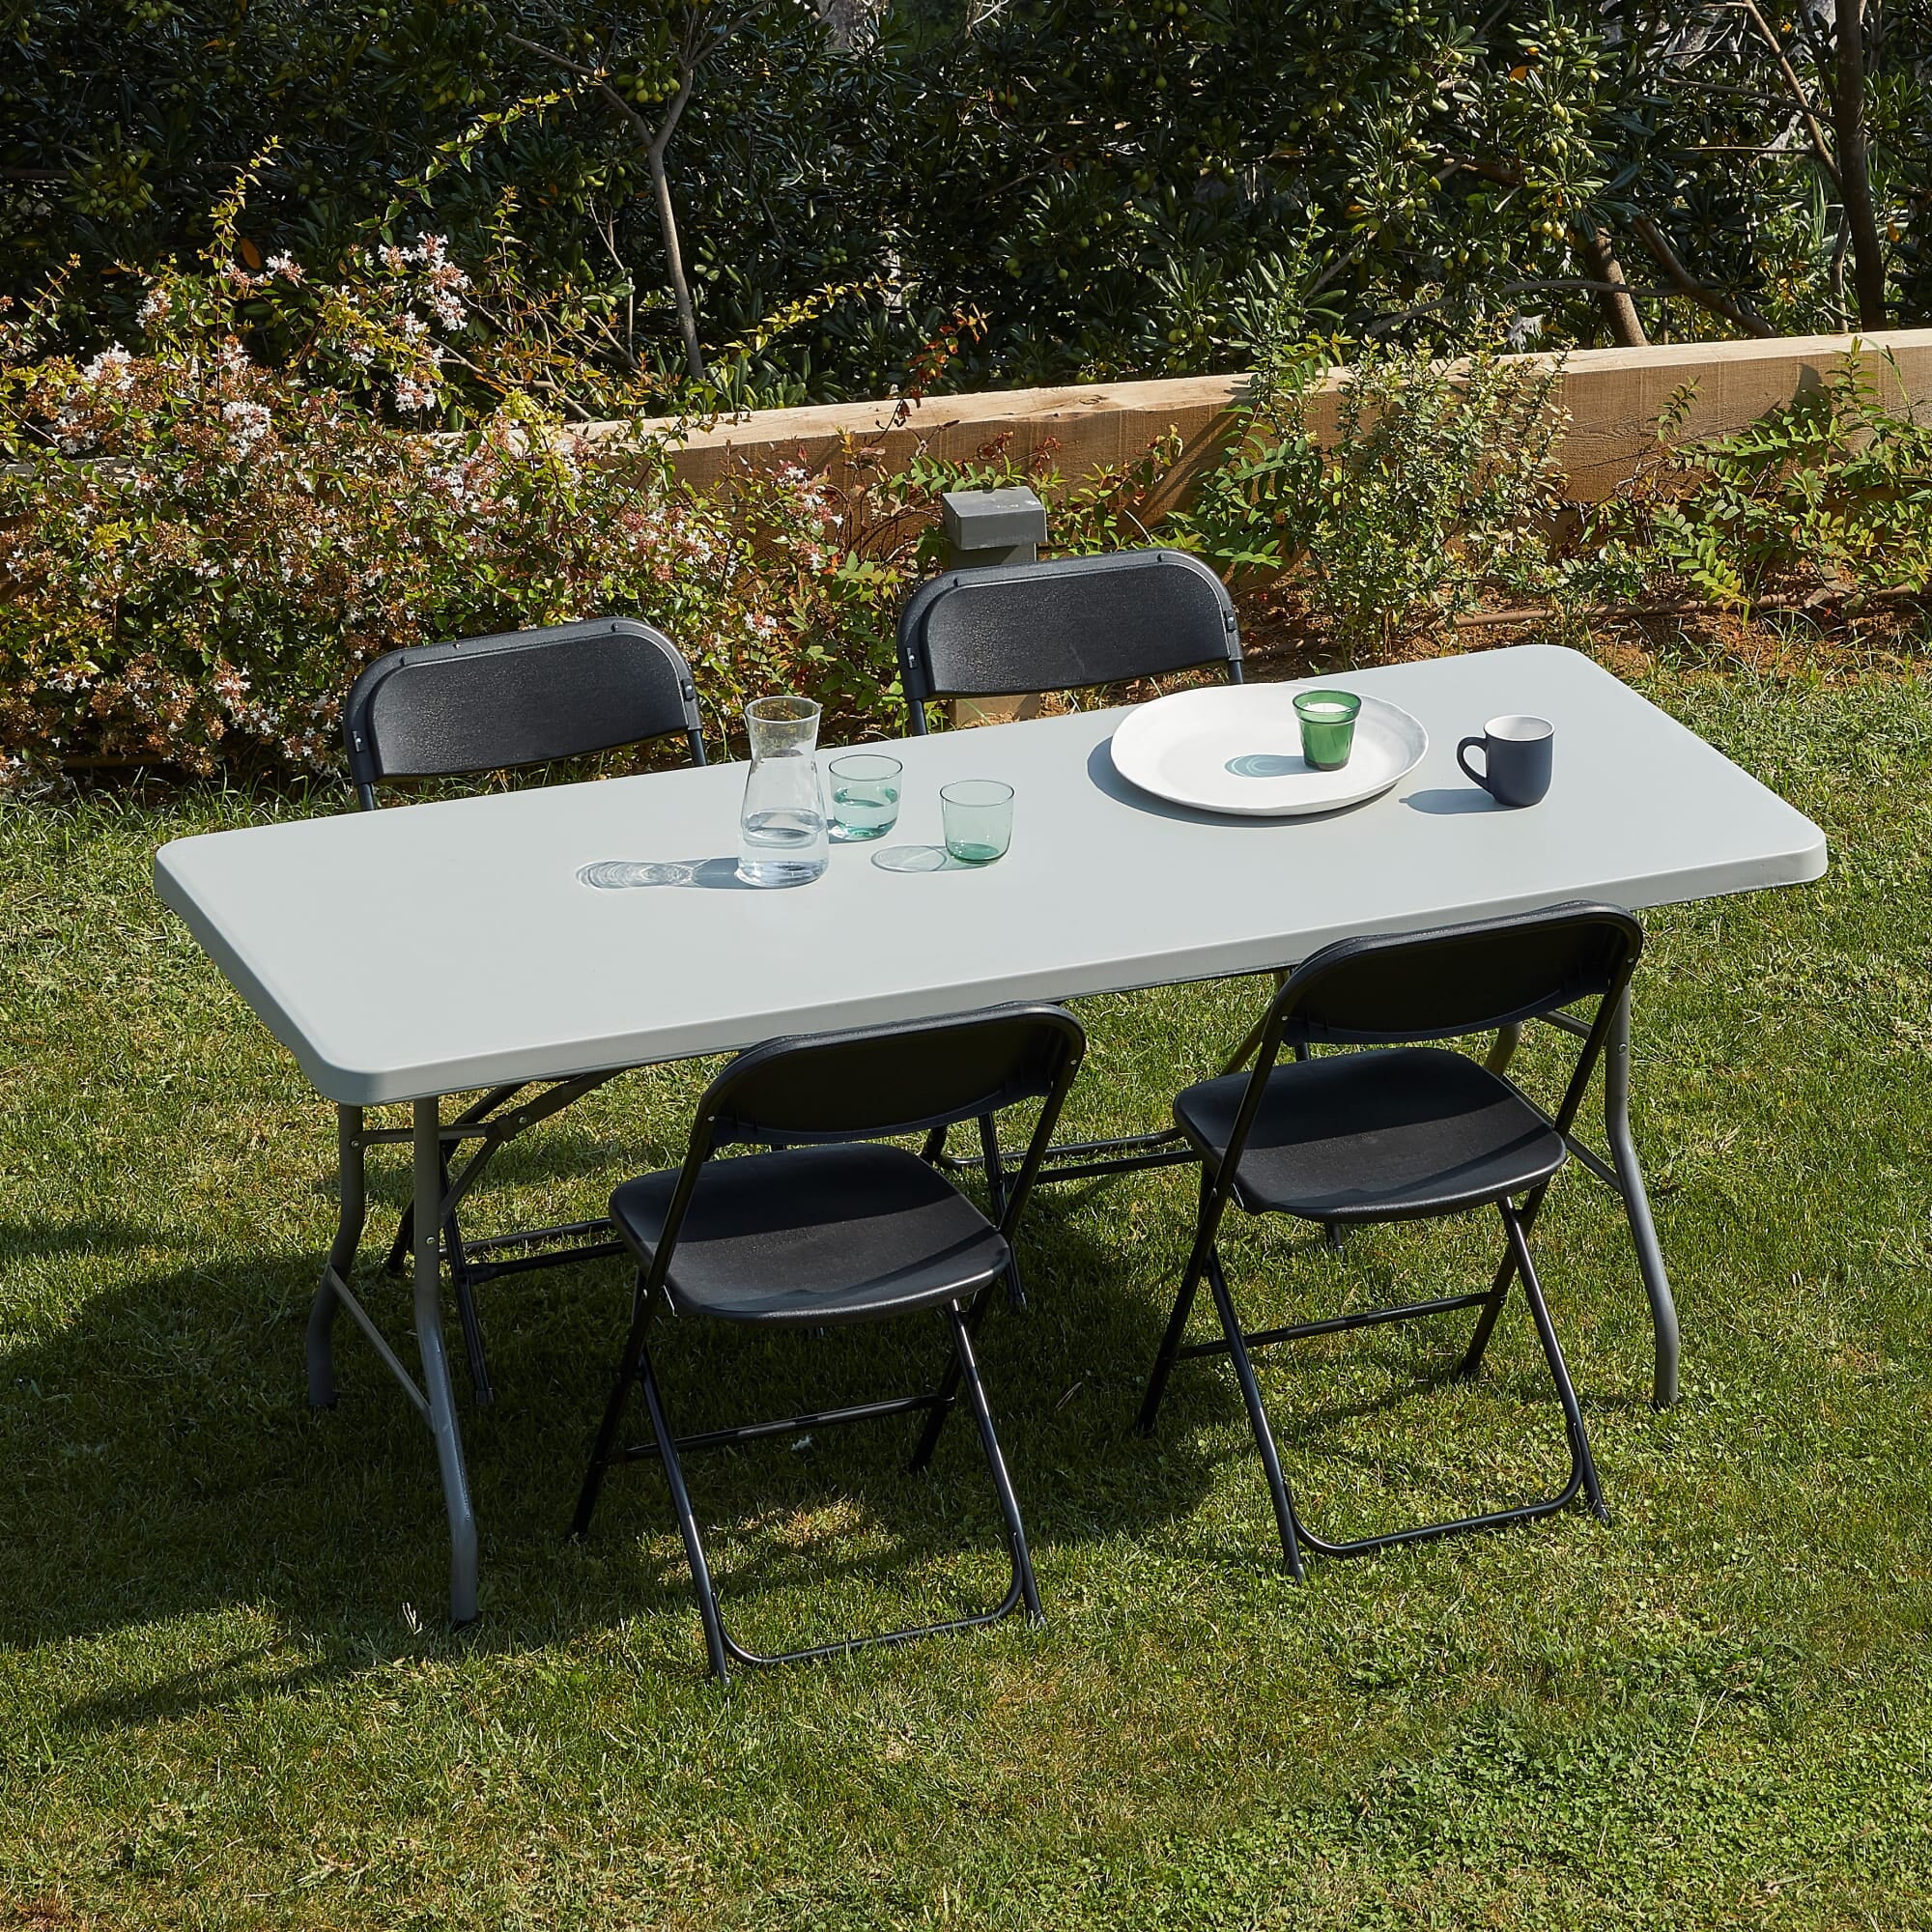 Garbar chopin rechthoekige opvouwbare tafel 180x75 grijs